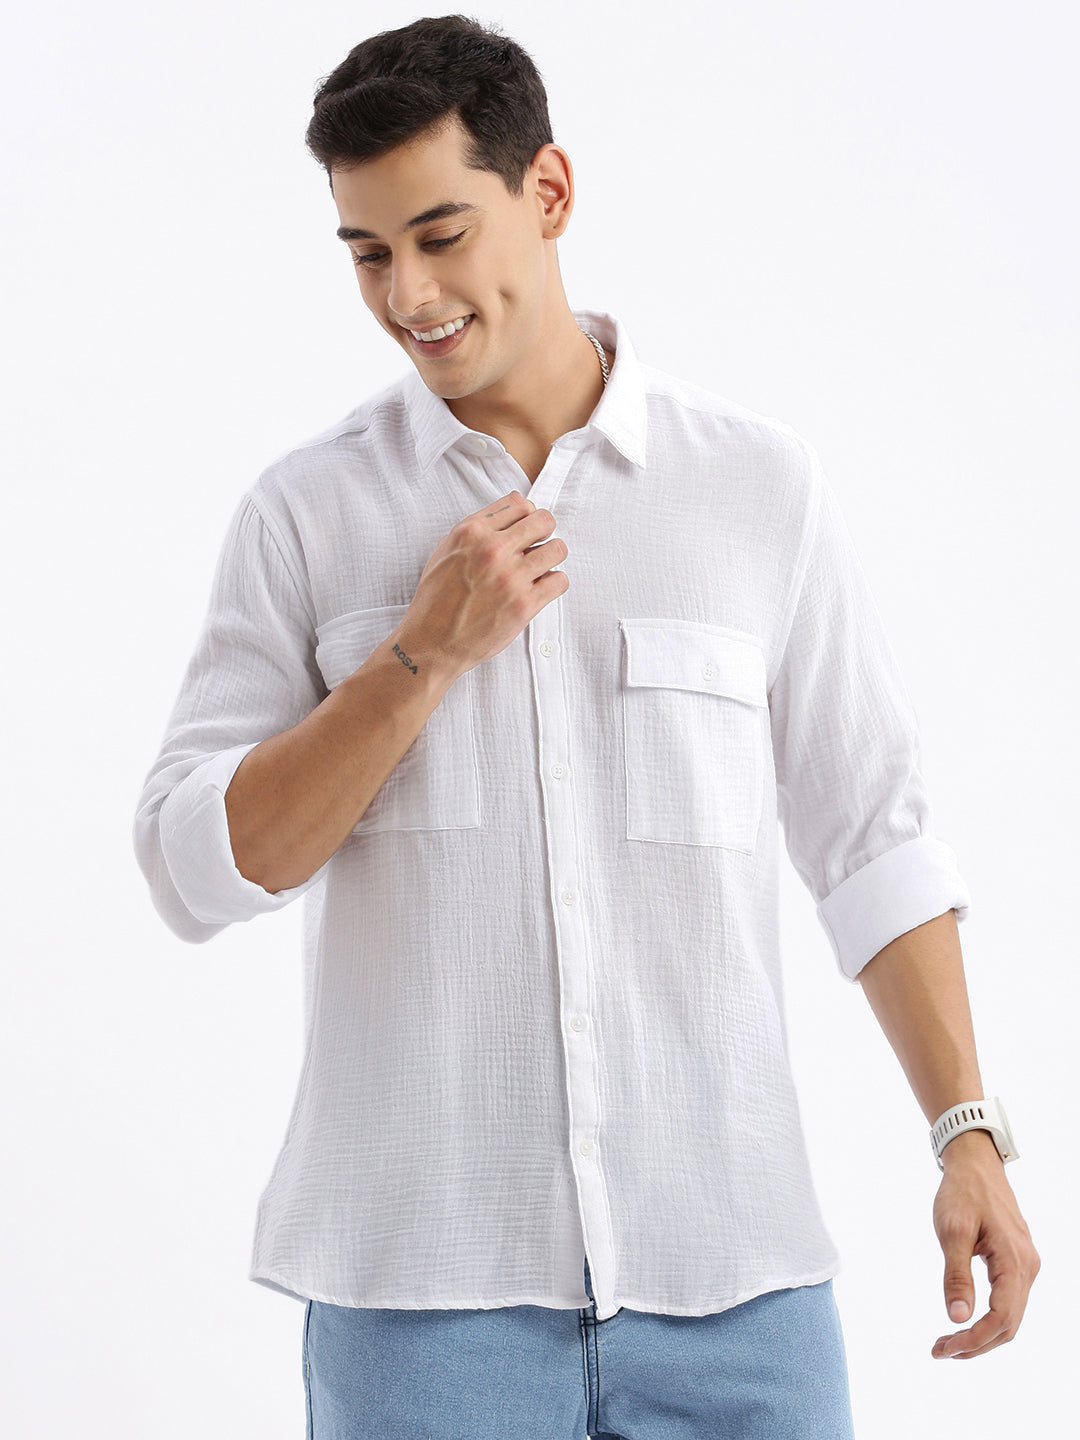 Men Spread Collar Solid Slim Fit White Shirt